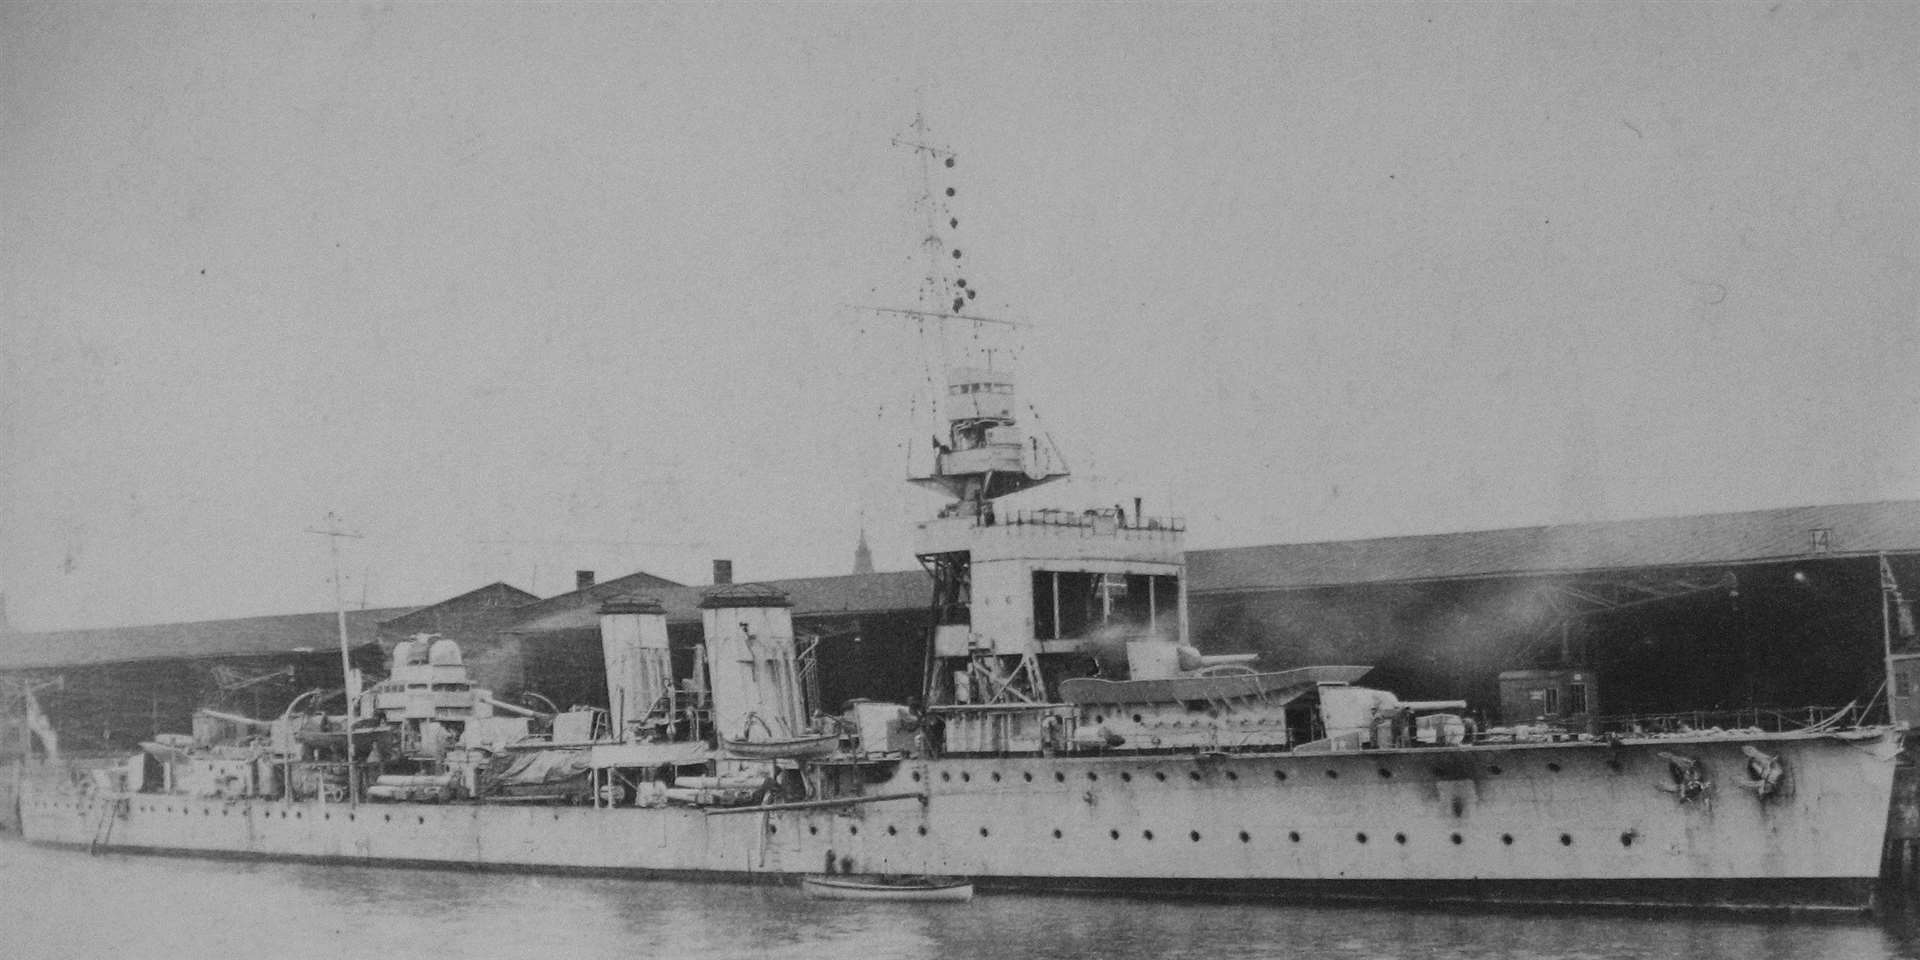 HMS Dragon, a Chatham-based light cruiser